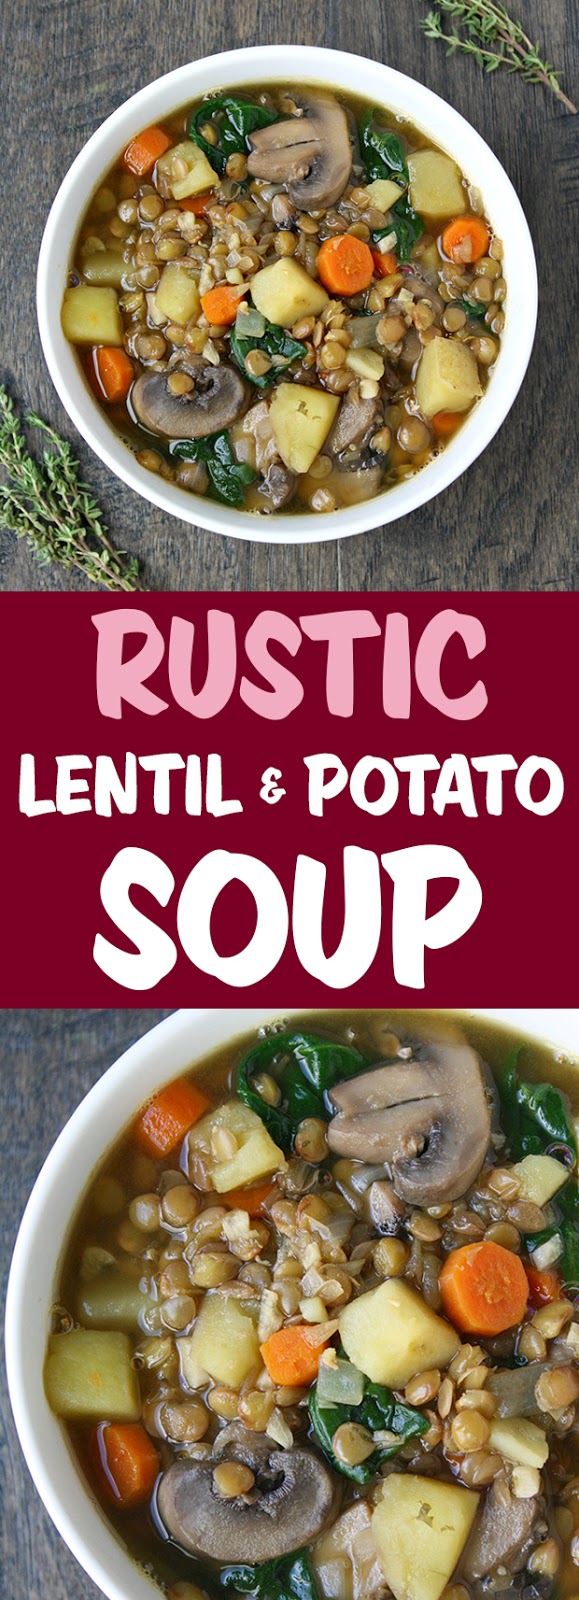 The Garden Grazer: Rustic Lentil and Potato Soup